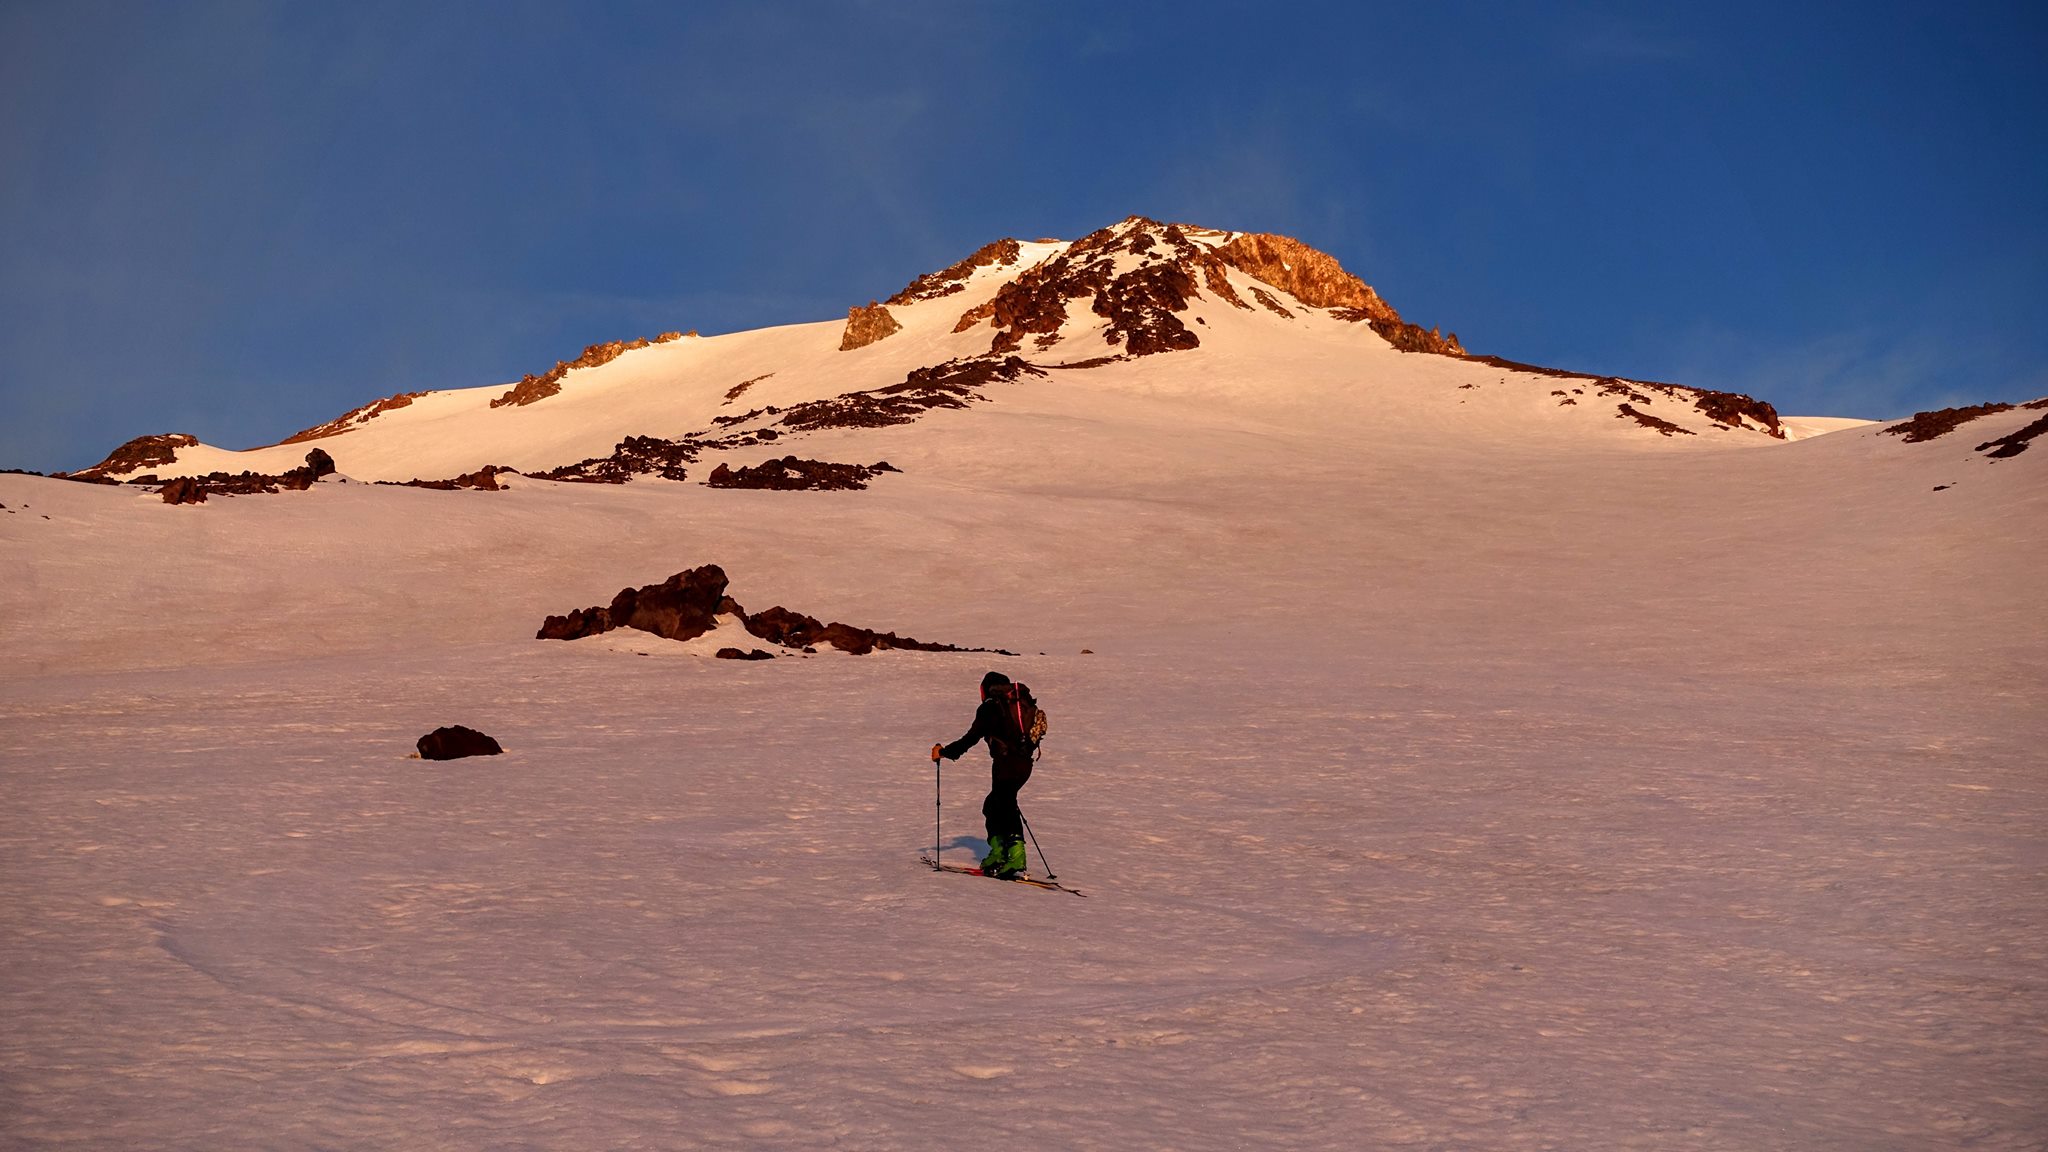 Trip Report: Mt. Shasta Ski Mountaineering